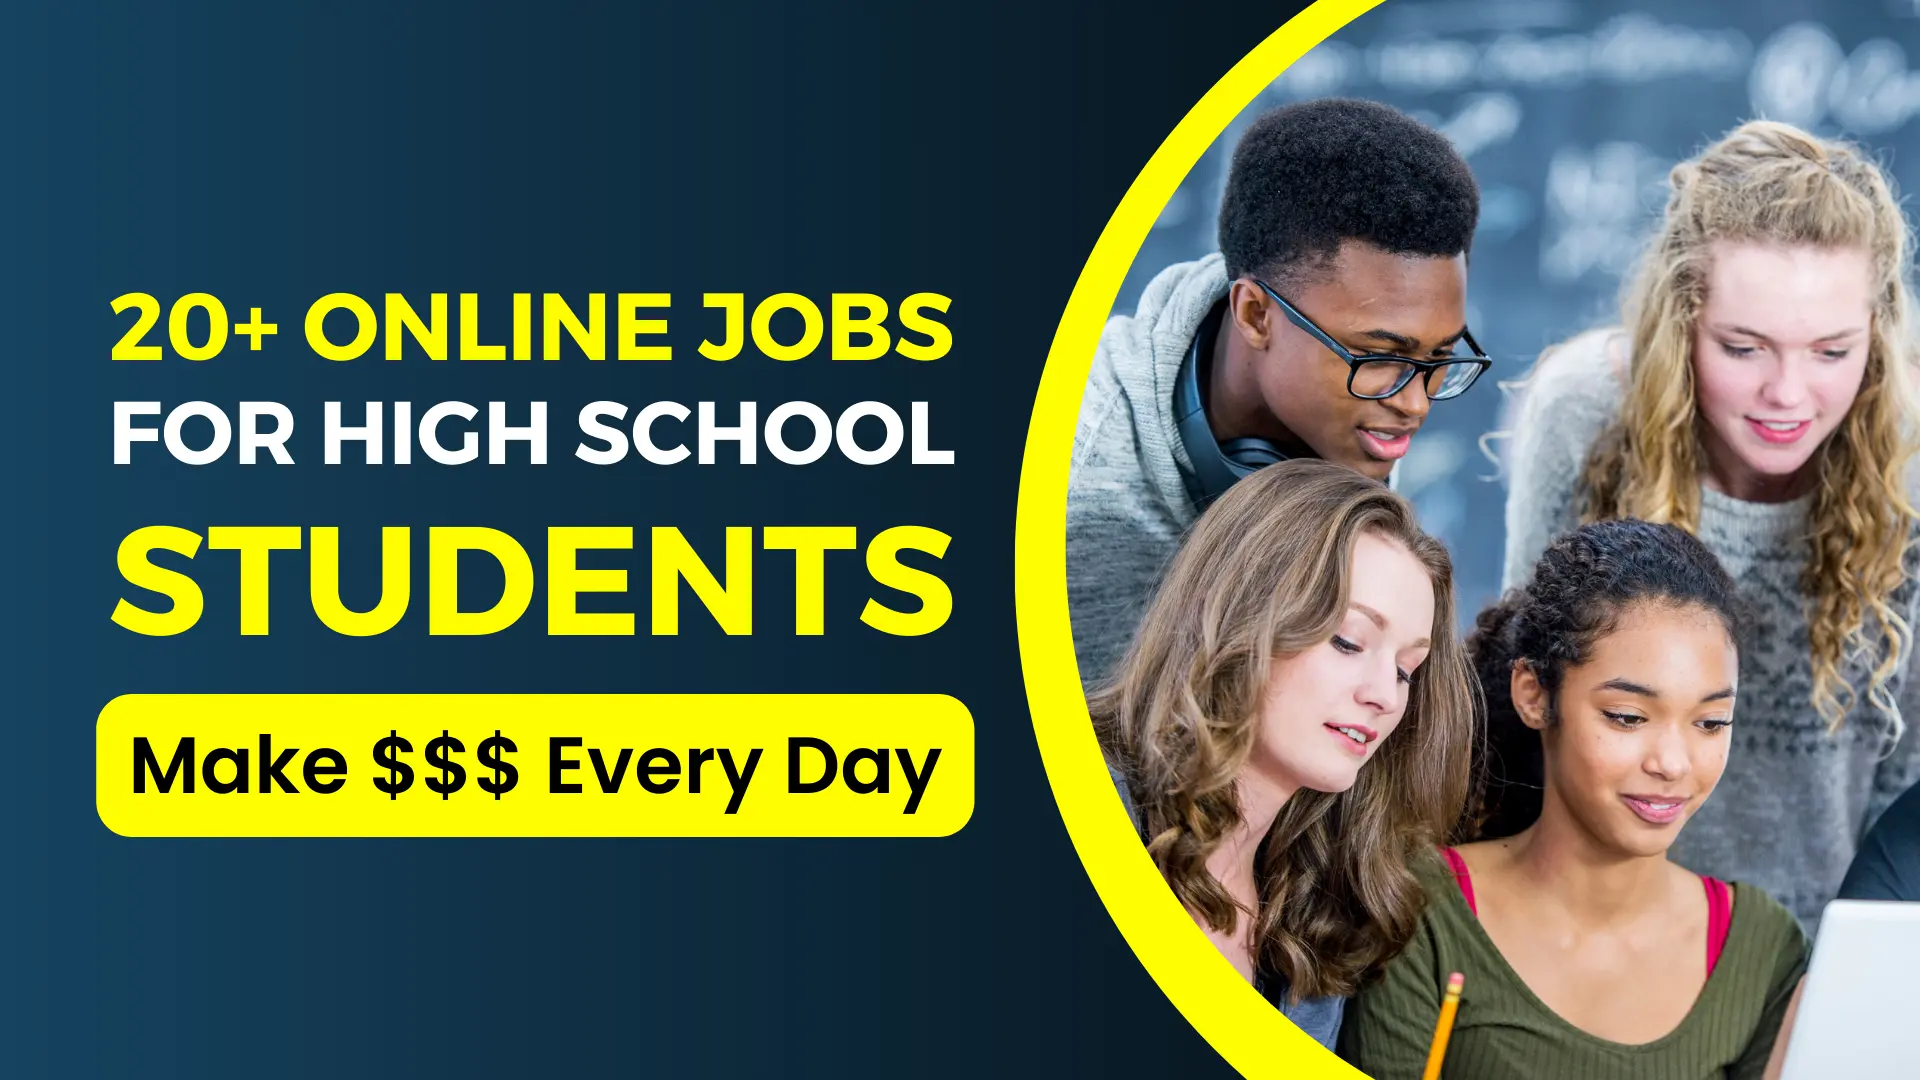 Online Jobs for High School Students